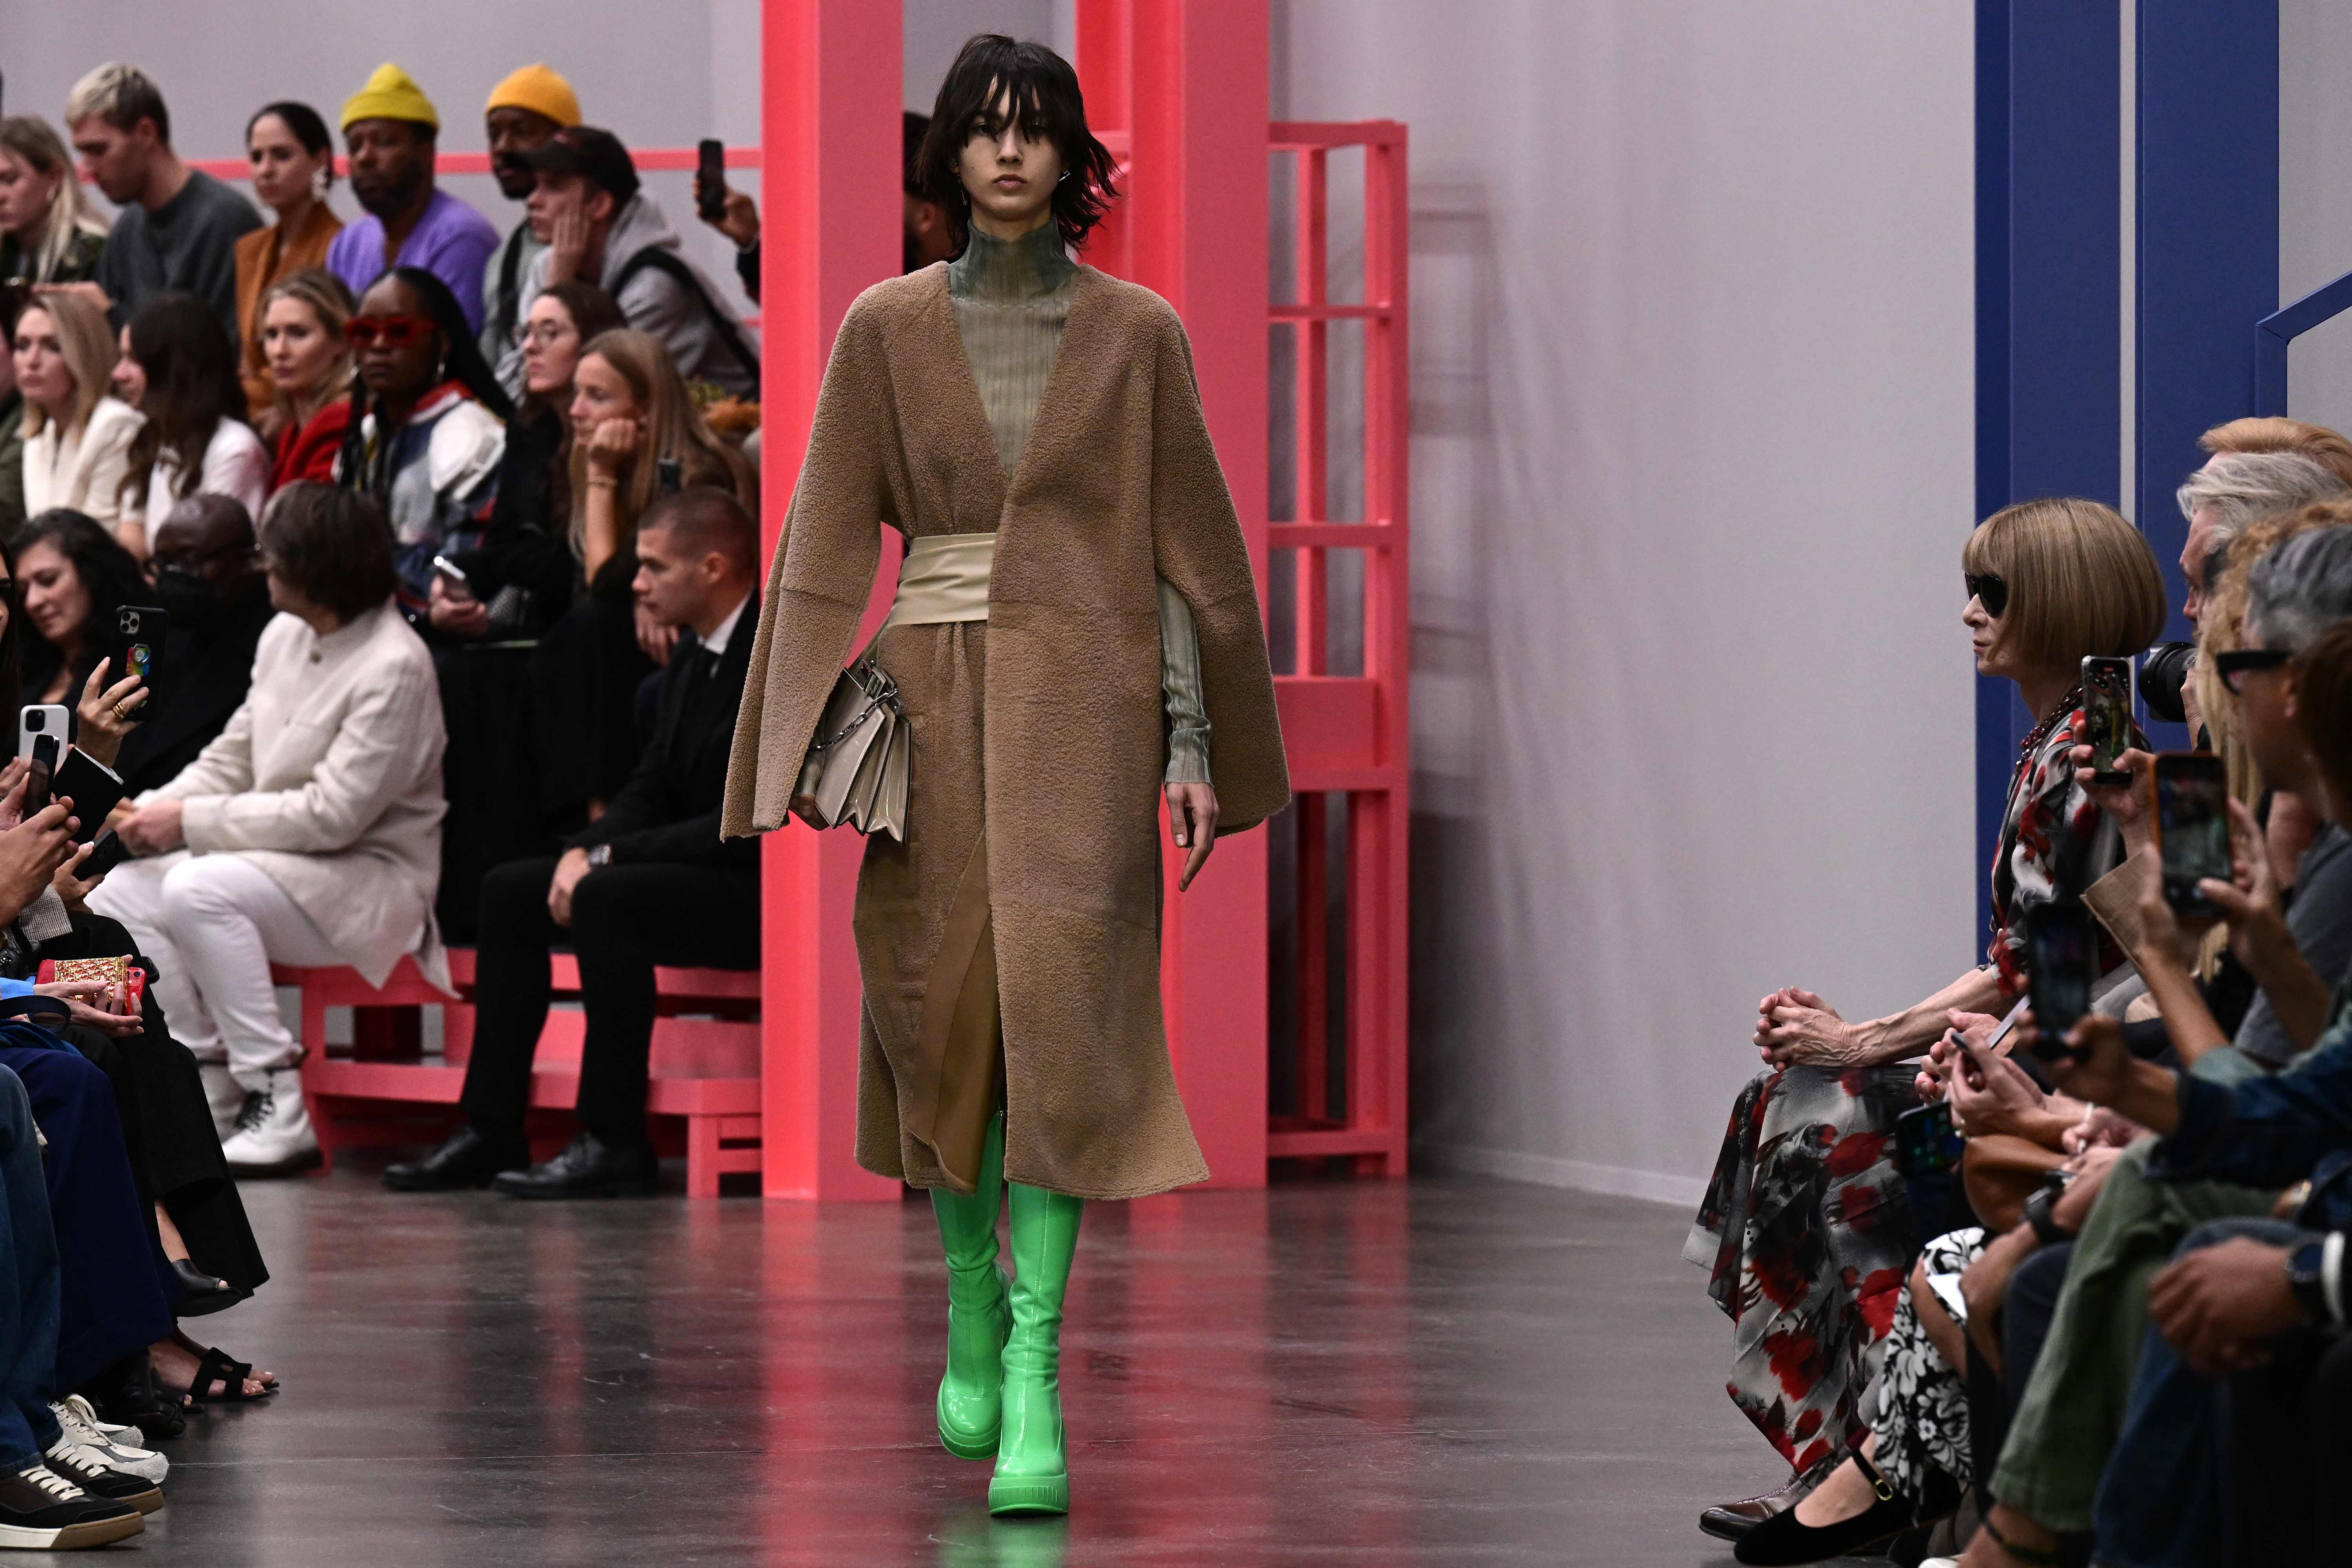 Designer Fashion Label Fendi Ditches Real Fur for Faux in Latest Fashion  Show